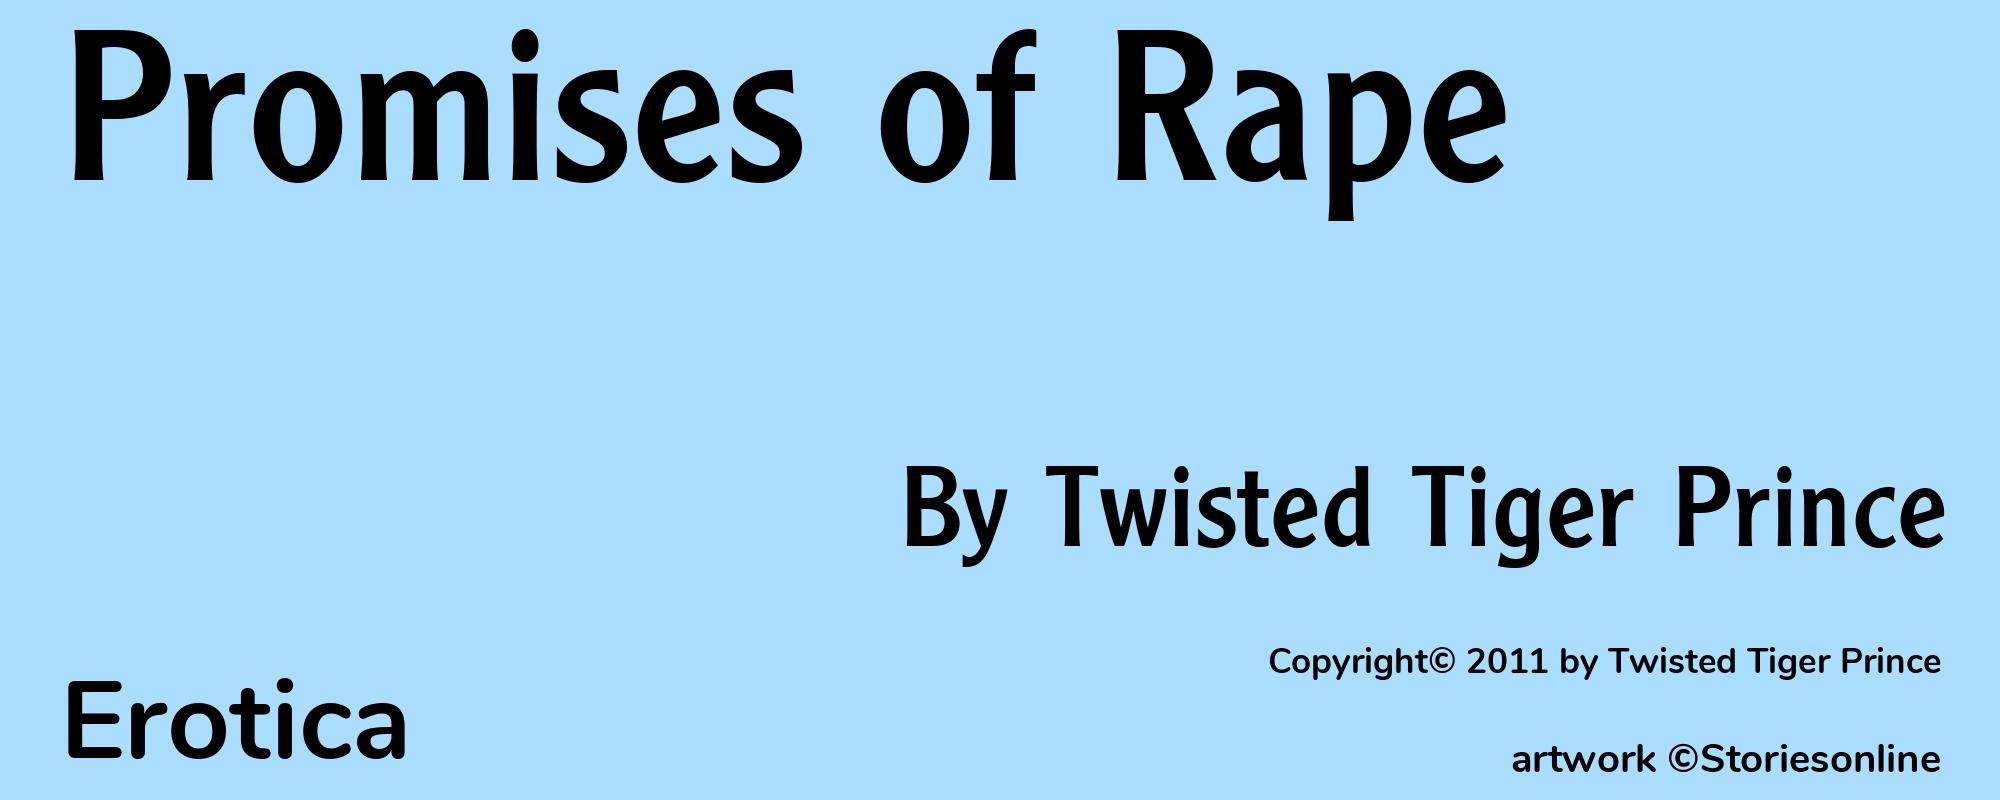 Promises of Rape - Cover